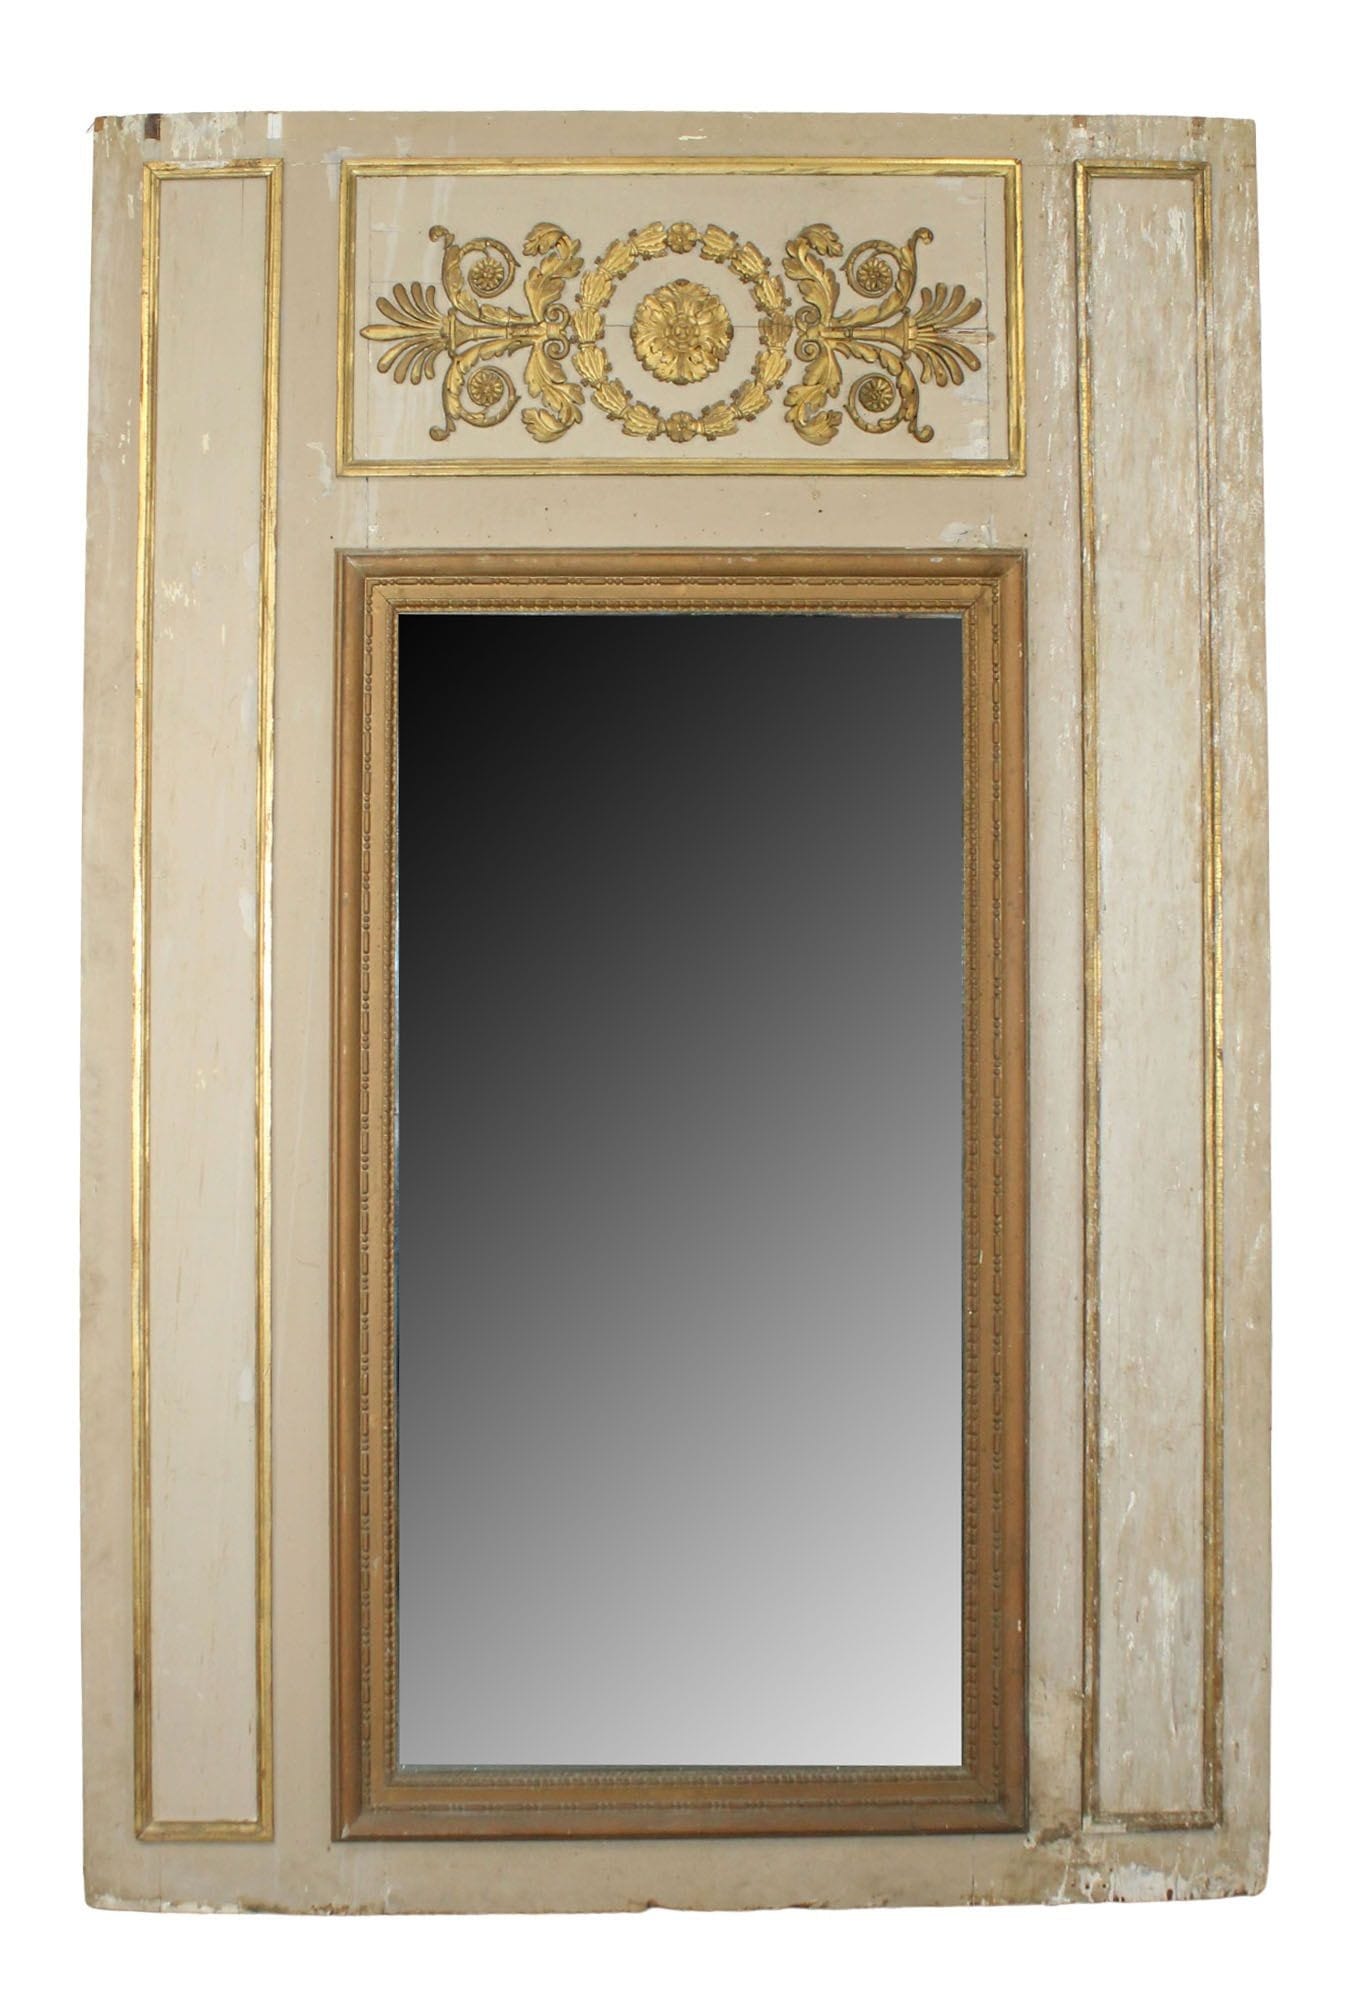 French Regency boiserie trumeau mirror